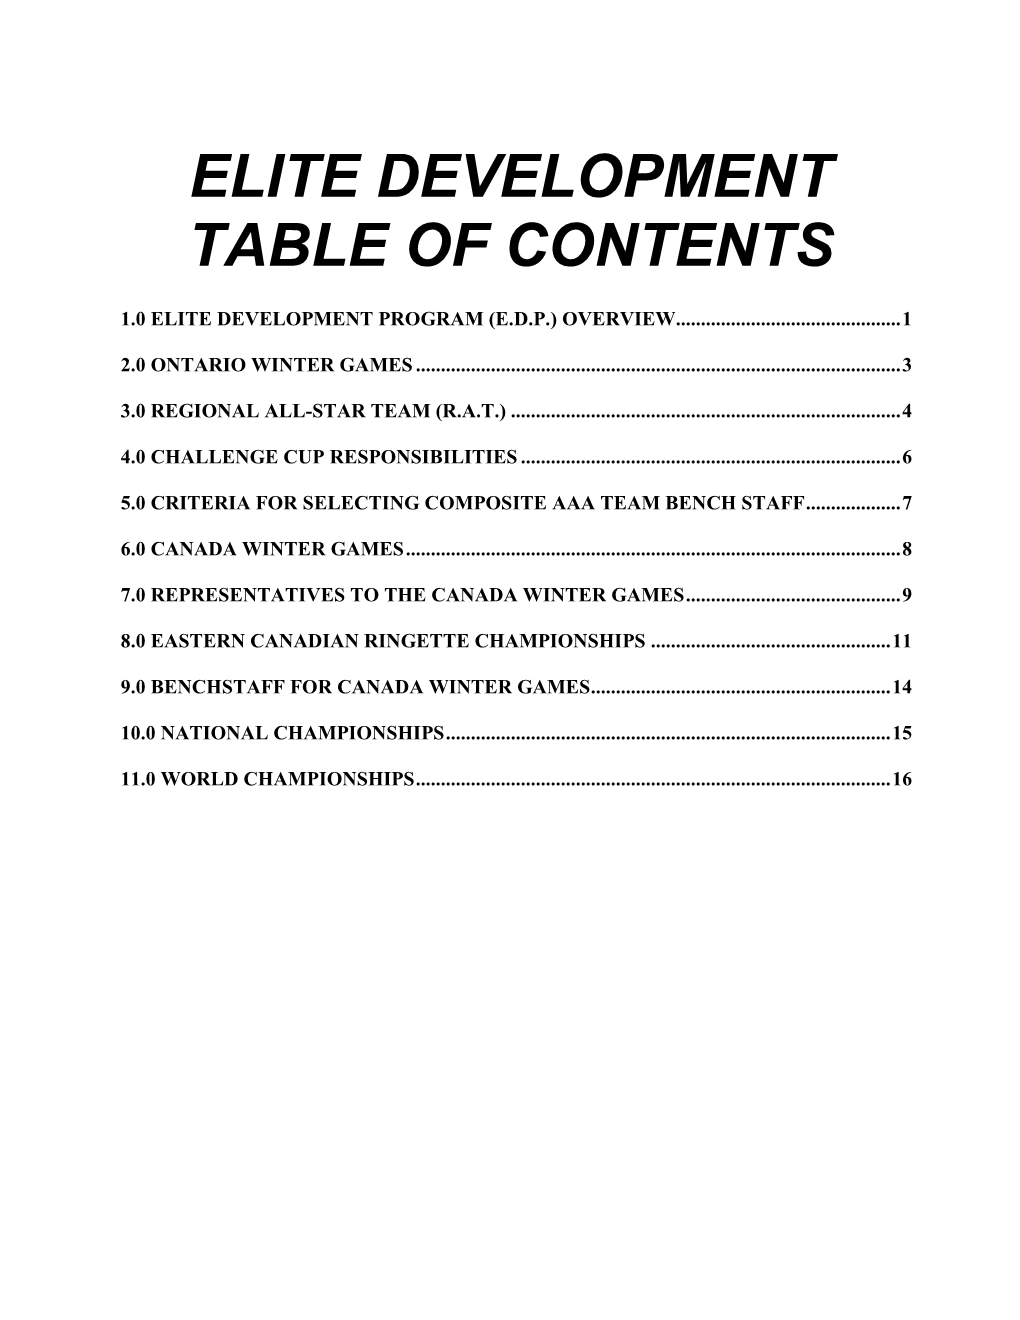 Elite Development Table of Contents